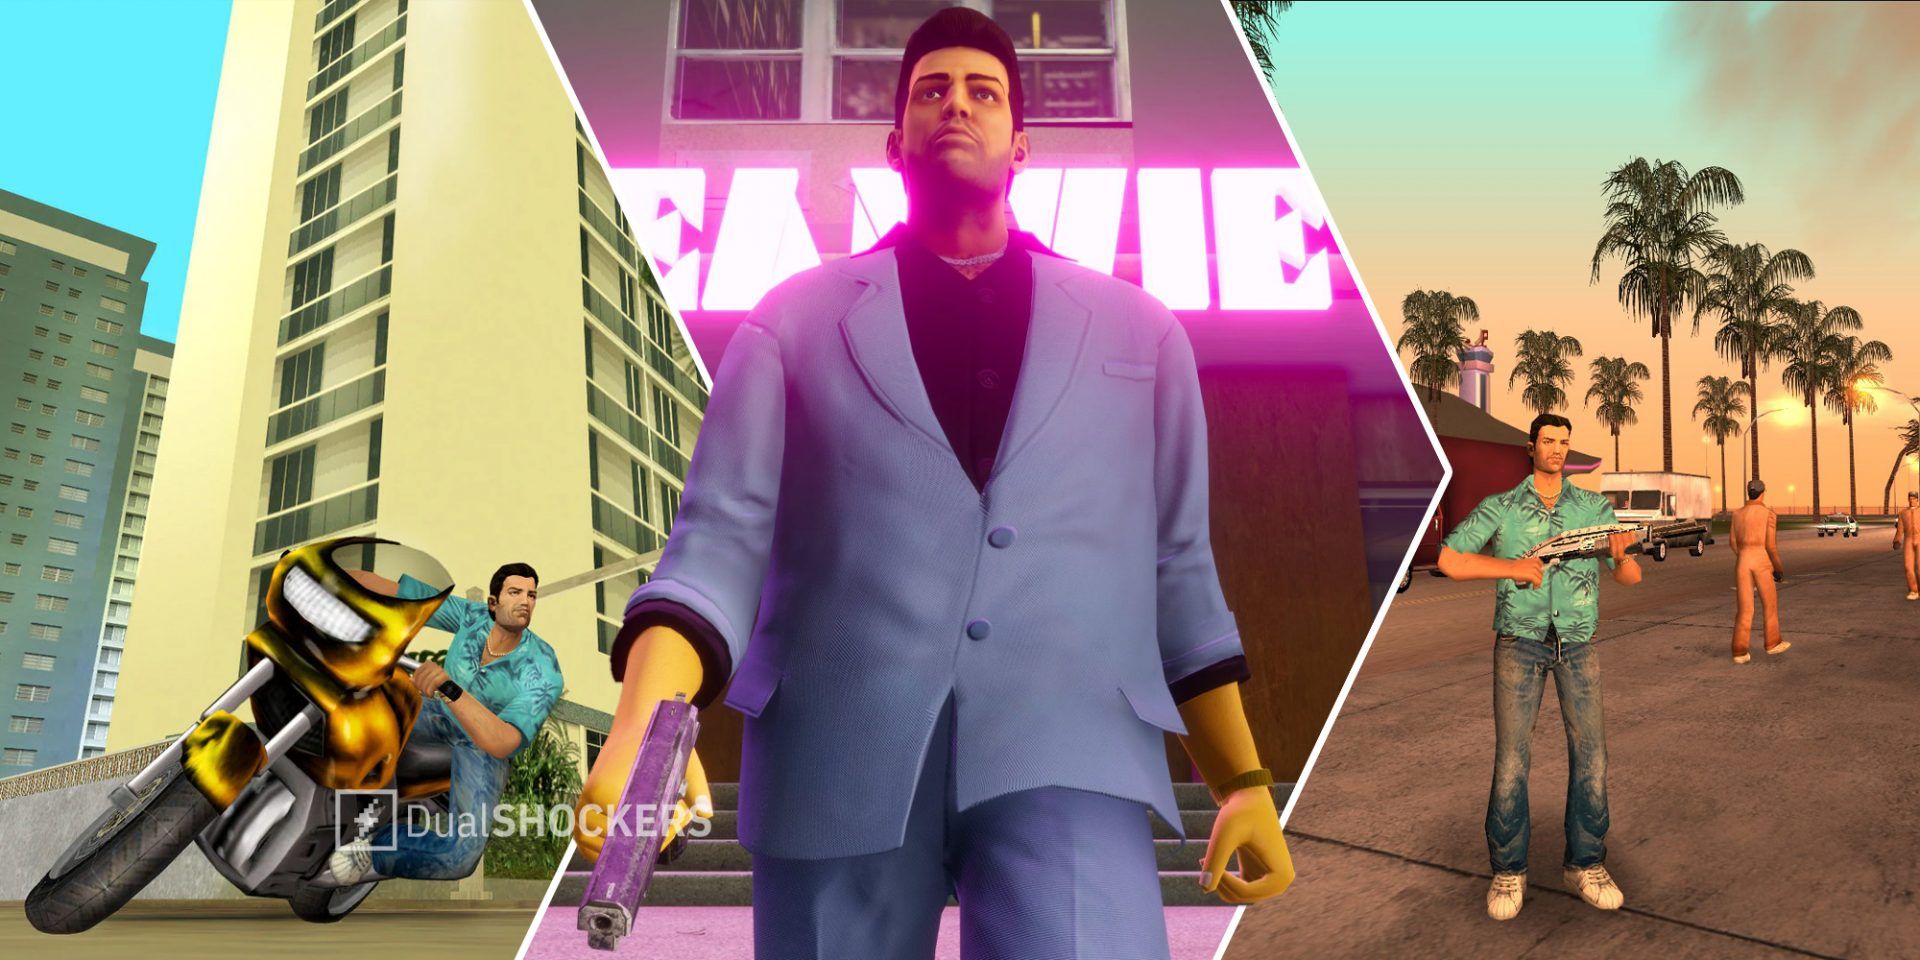 Grand Theft Auto:Vice City! : r/nostalgia